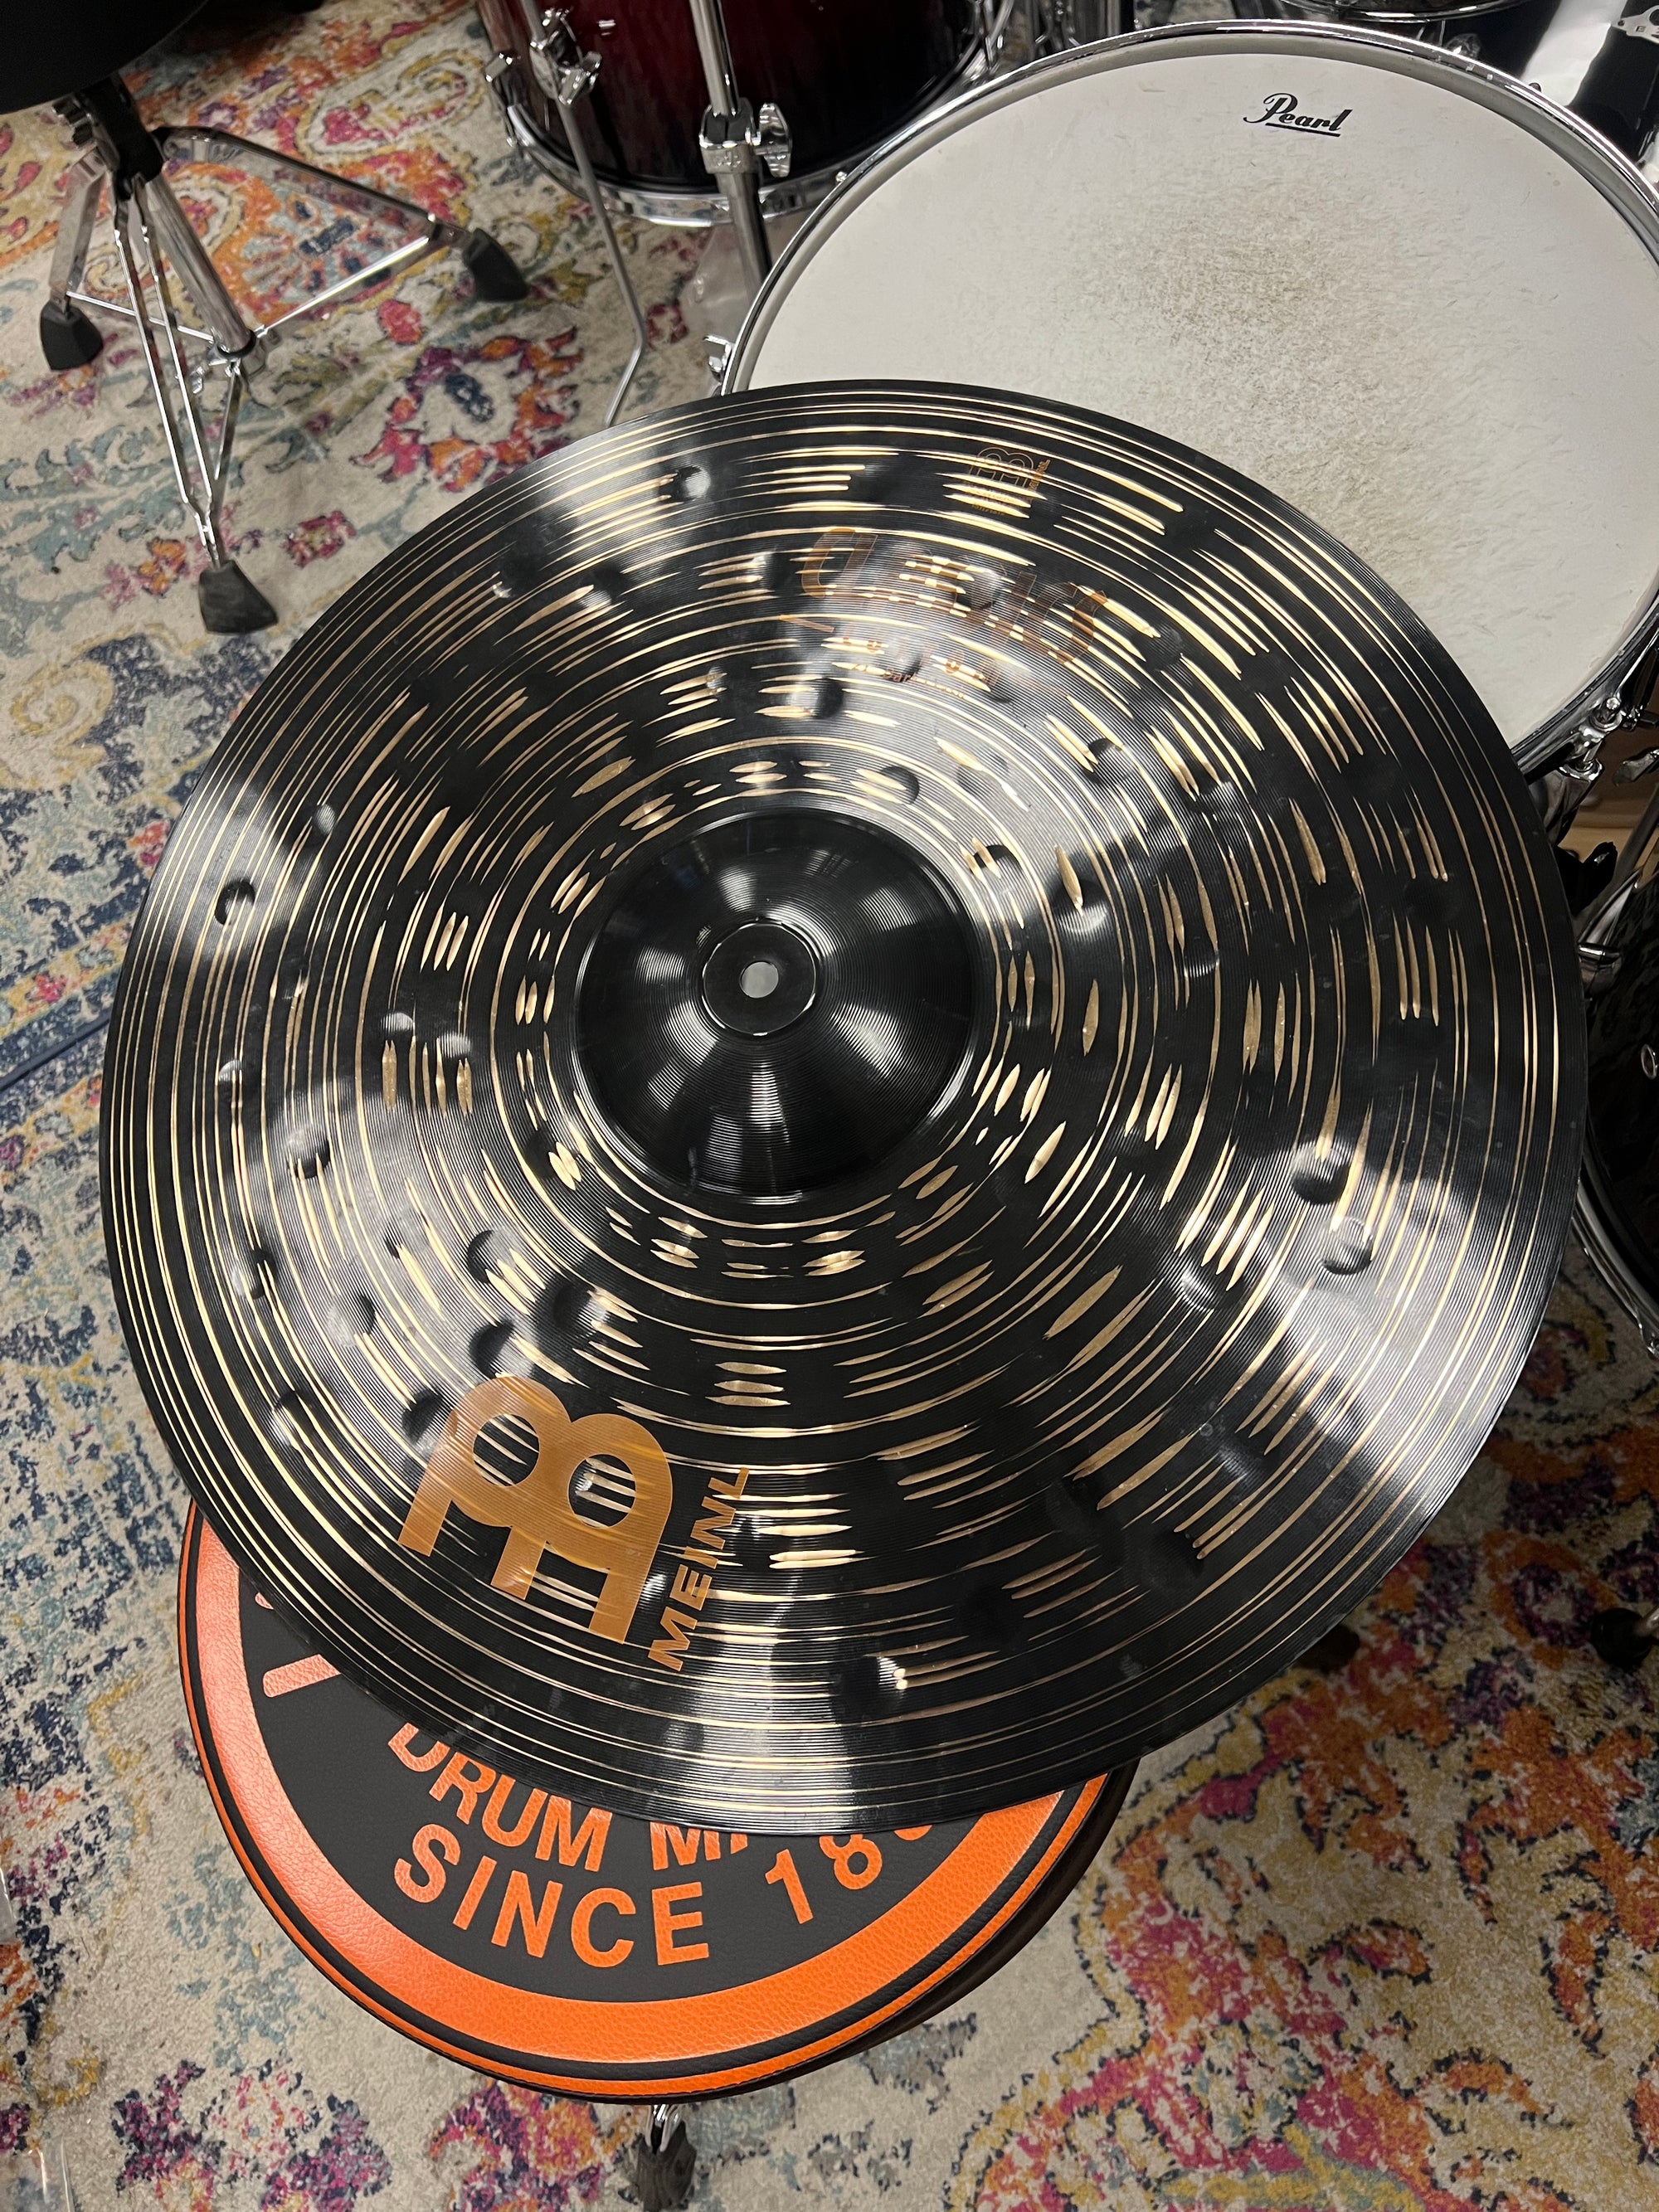 Meinl 21” Classics Custom Dark Crash Cymbal